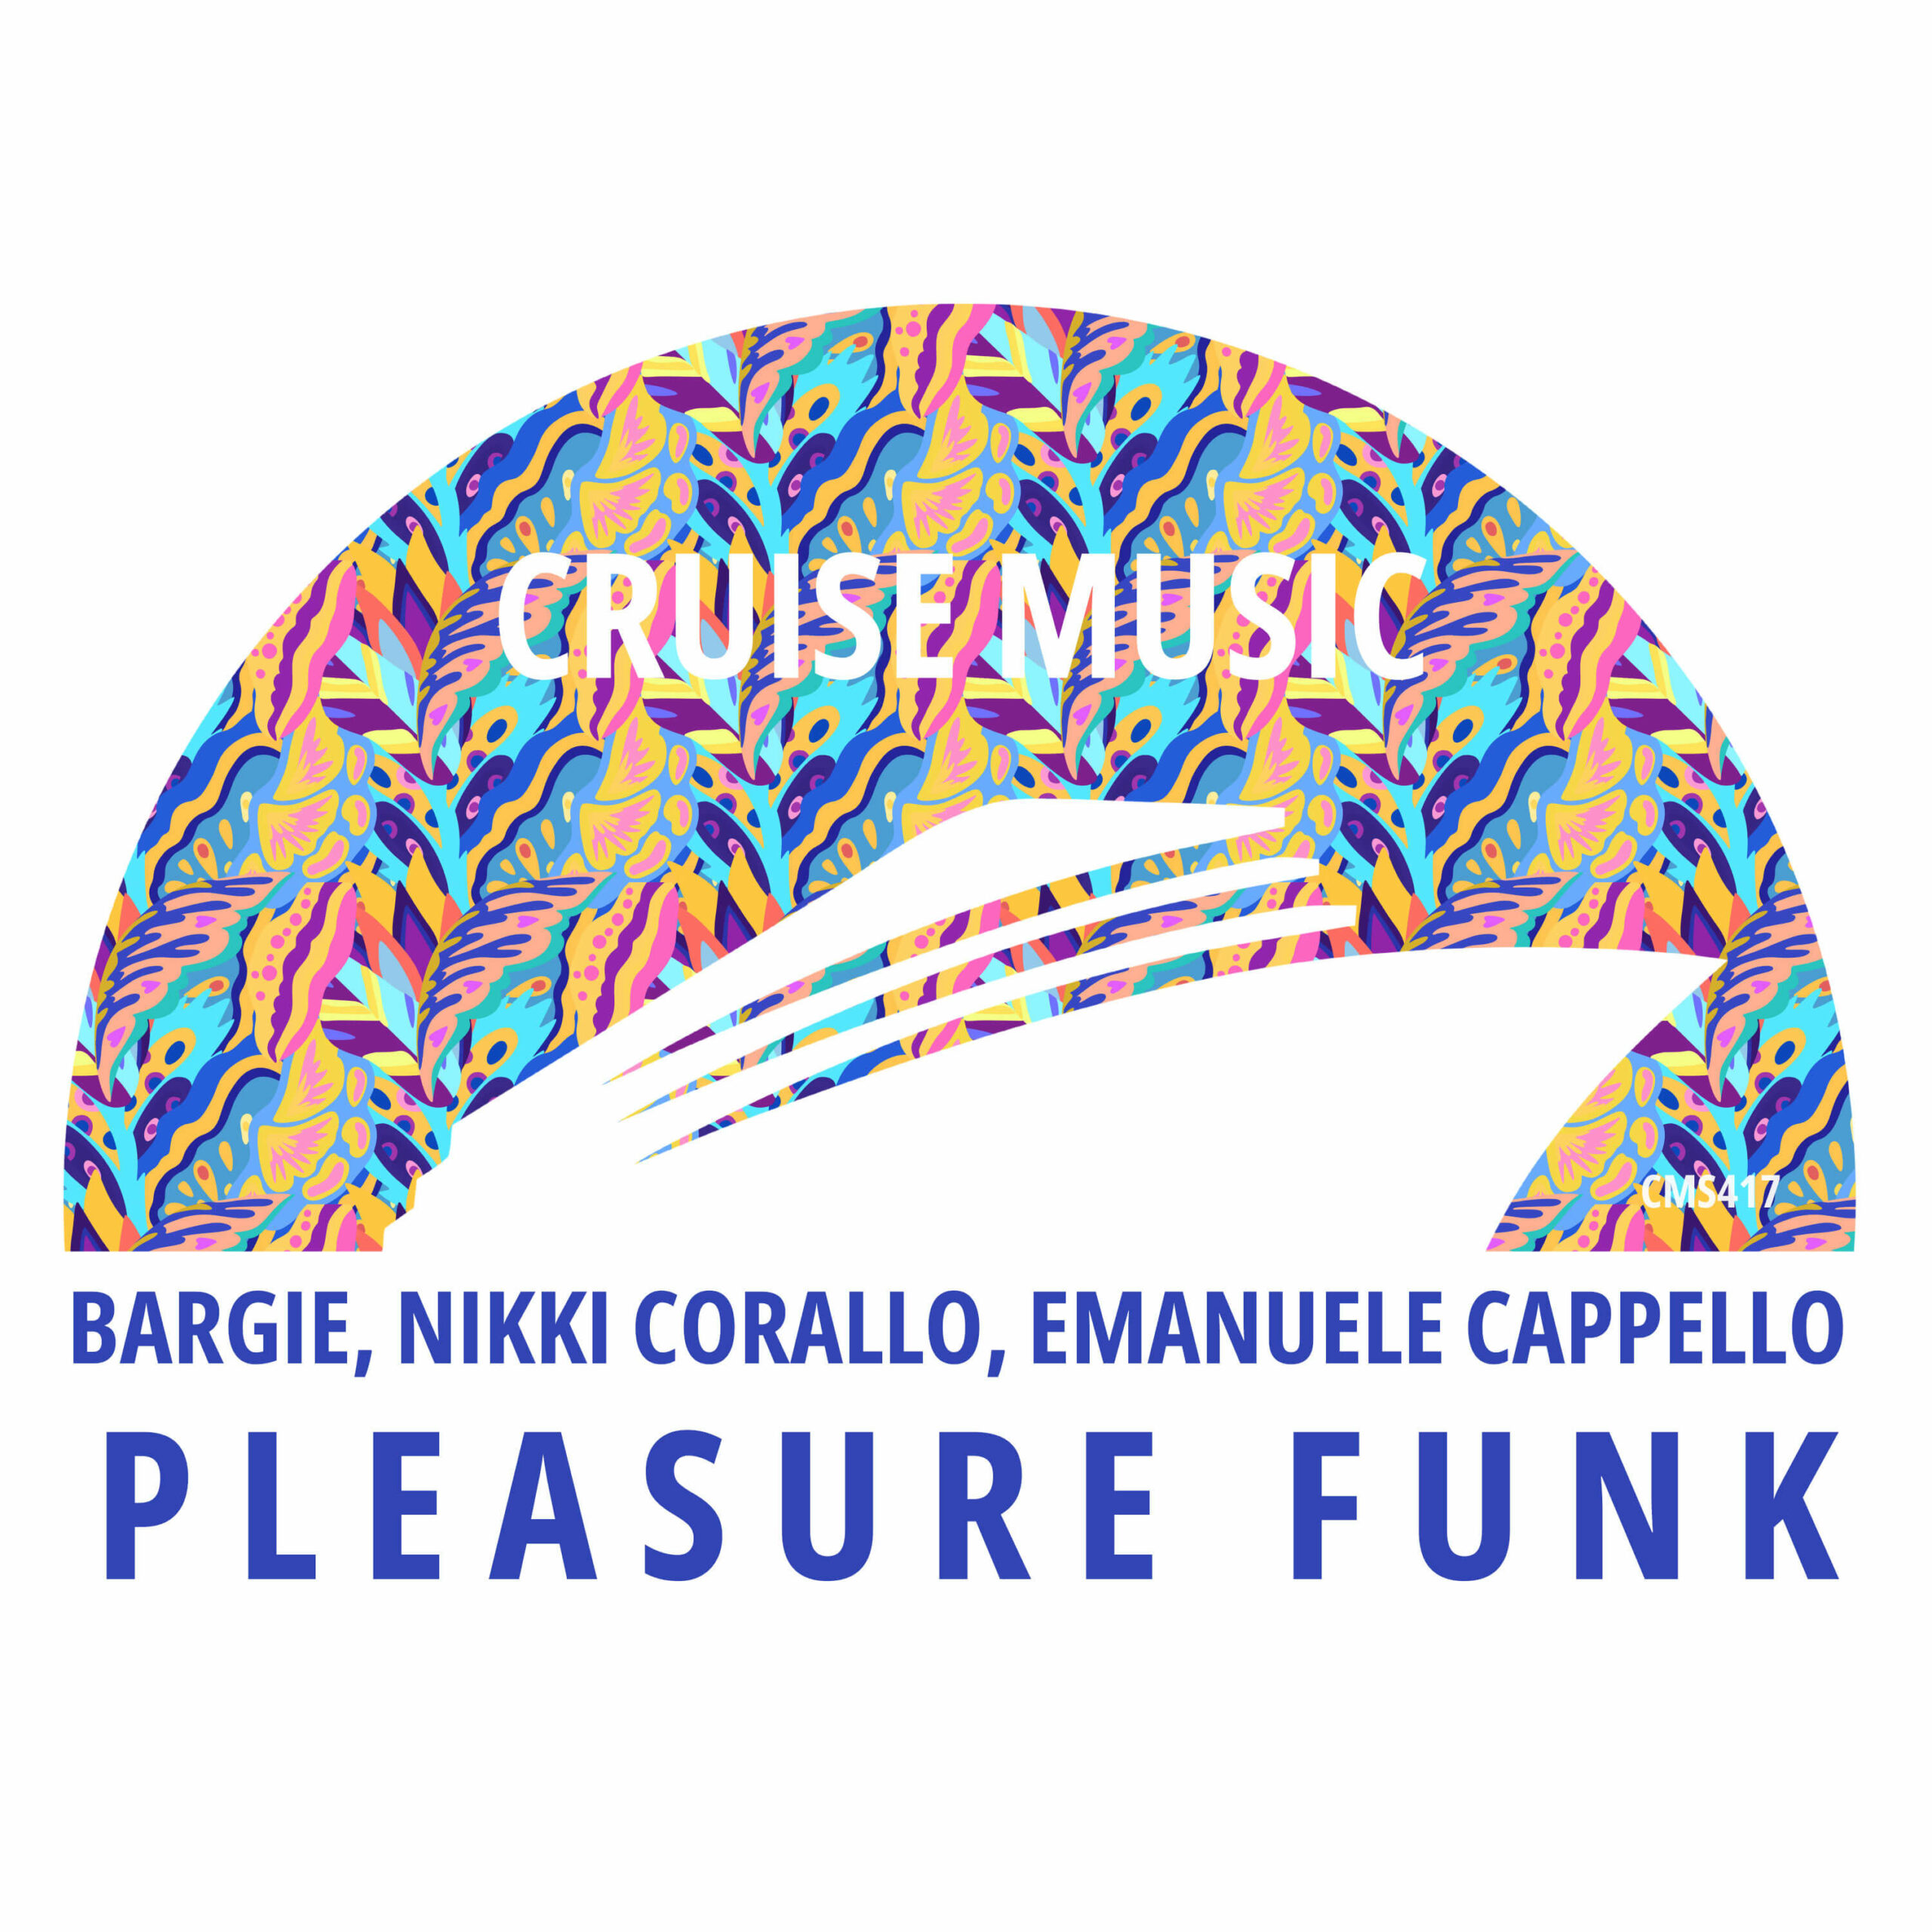 Bargie, Nikki Corallo, Emanuele Cappello - Pleasure Funk